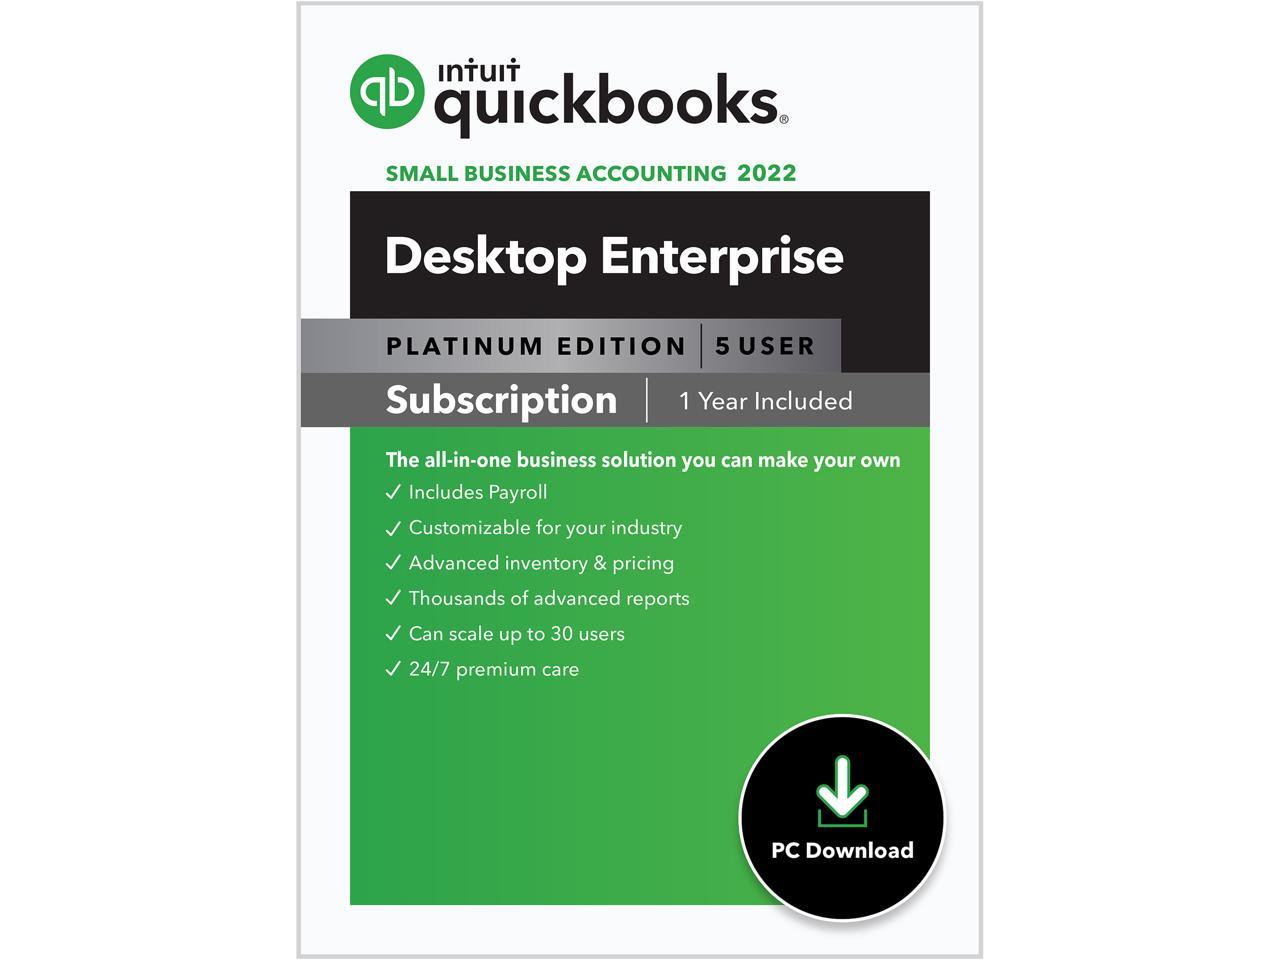 can quickbooks desktop download credit card transactions